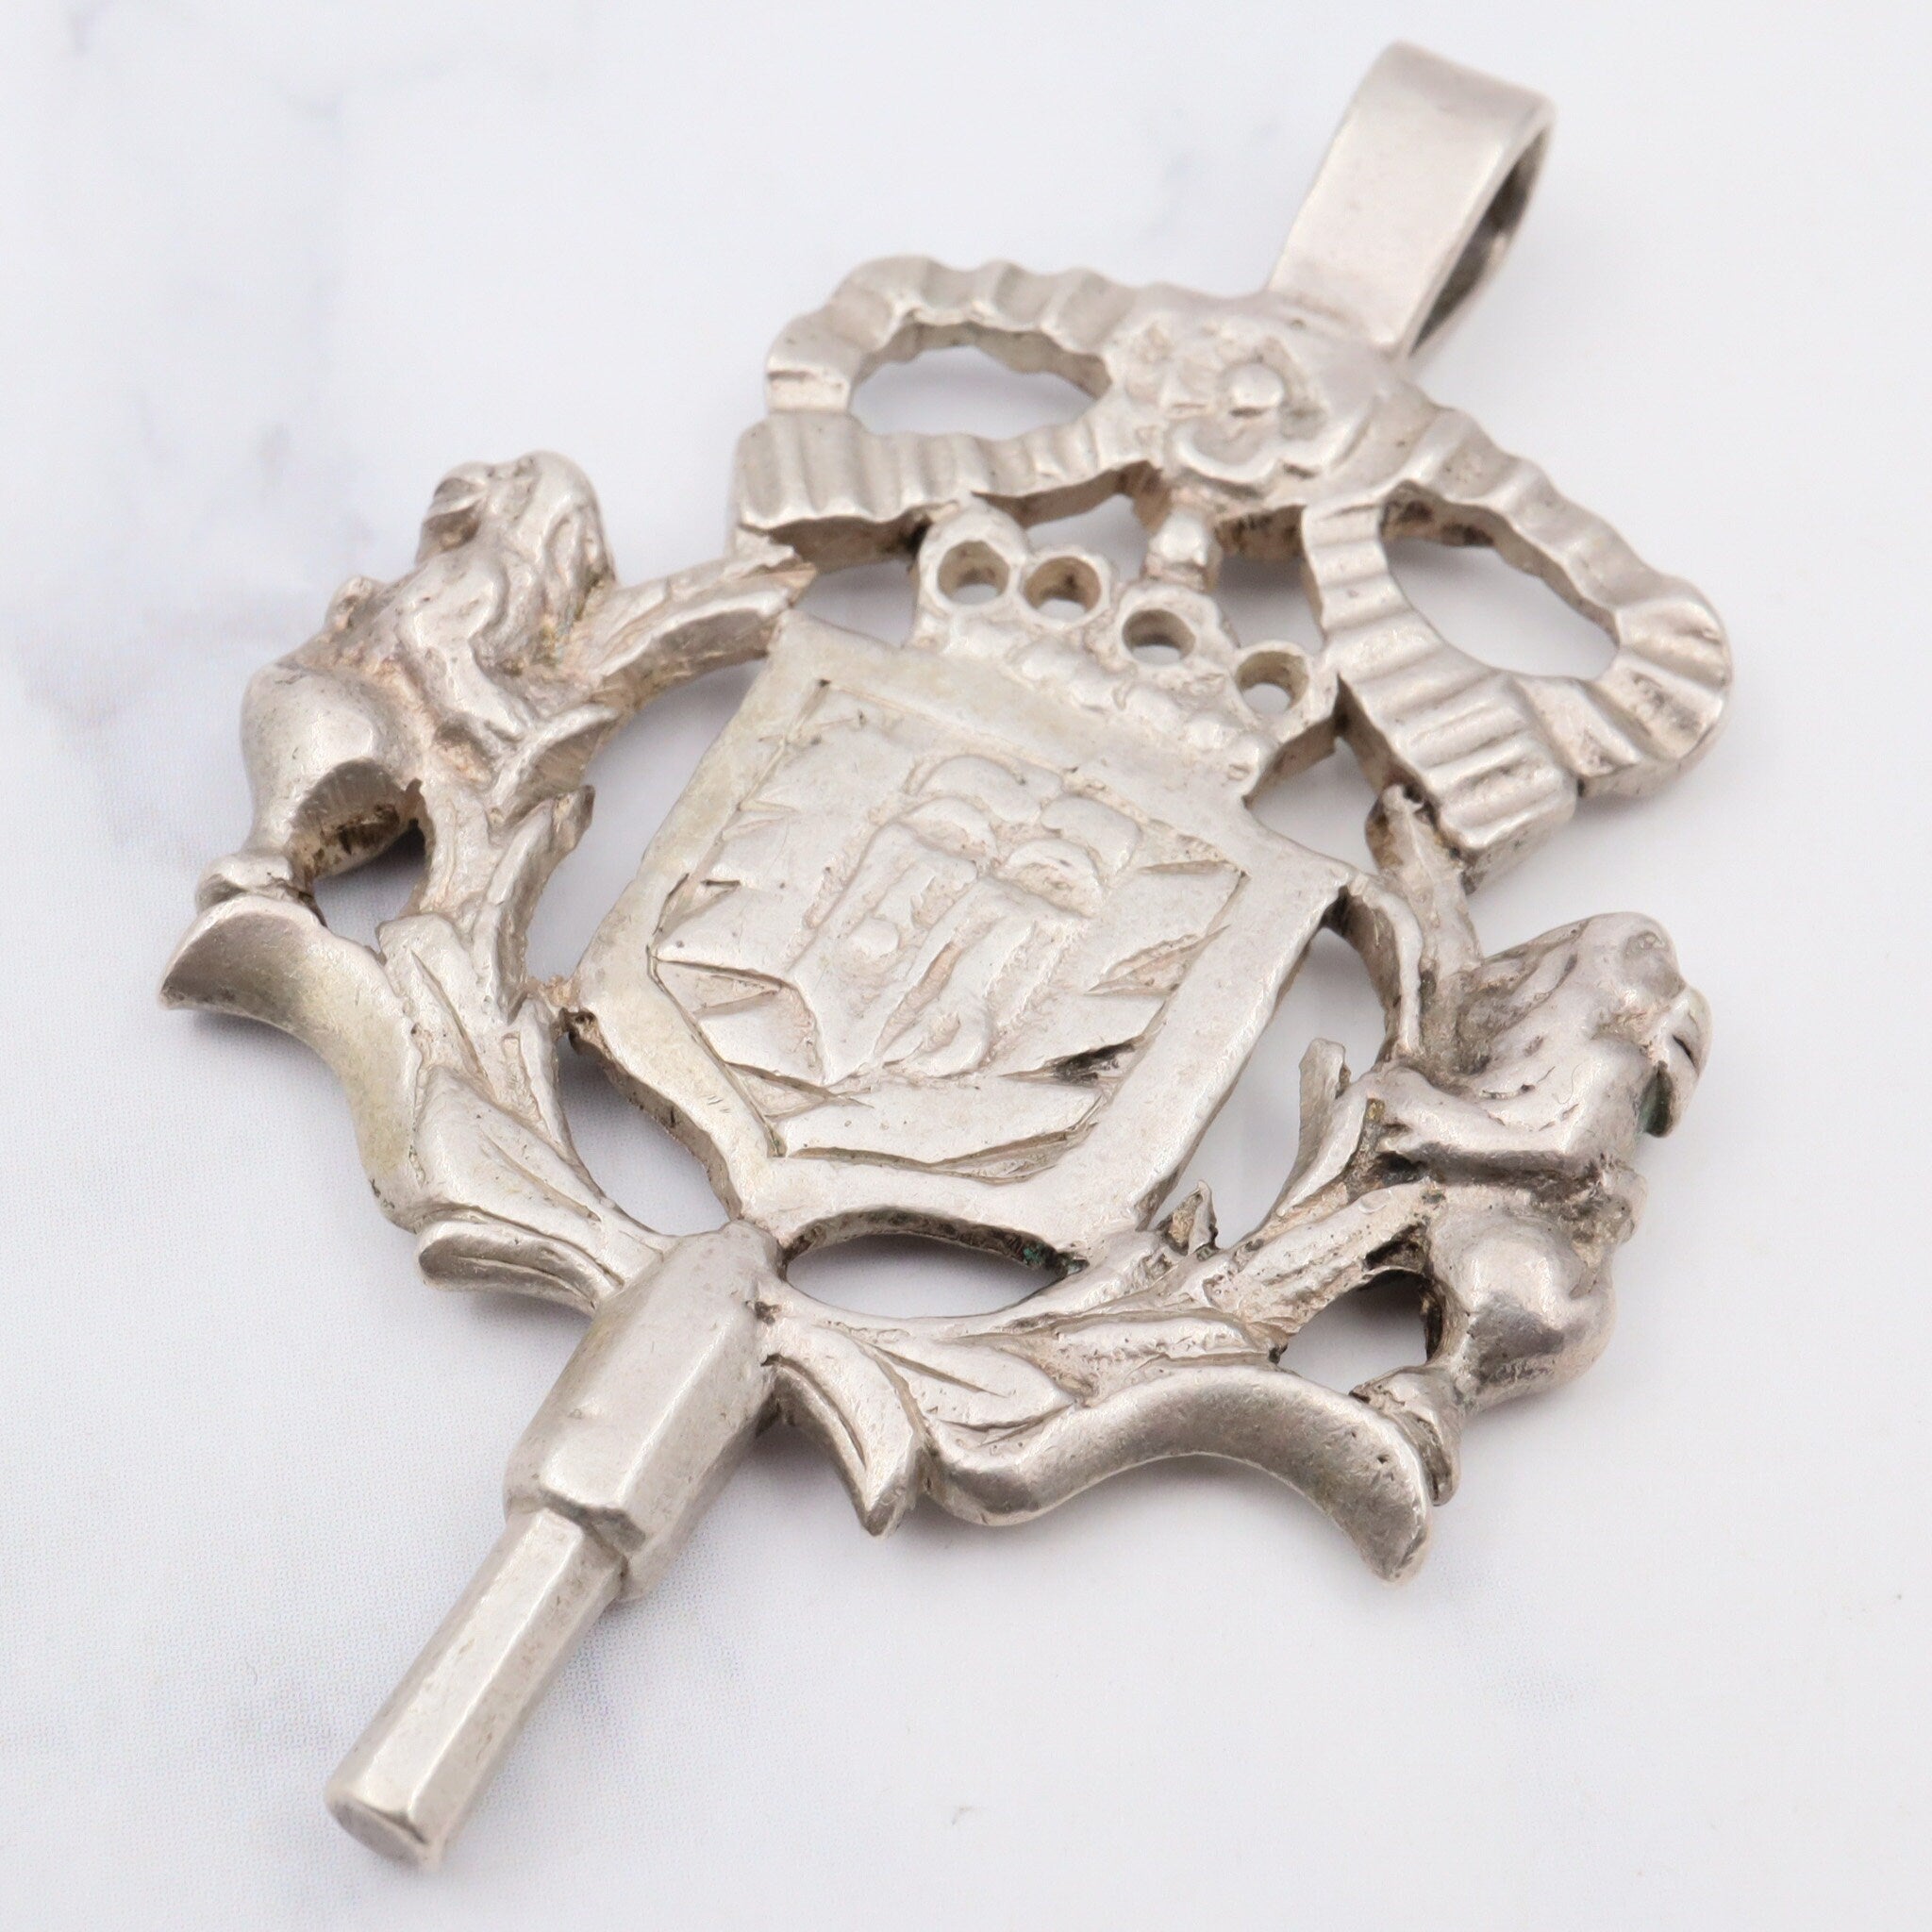 Antique european silver watch key fob pendant